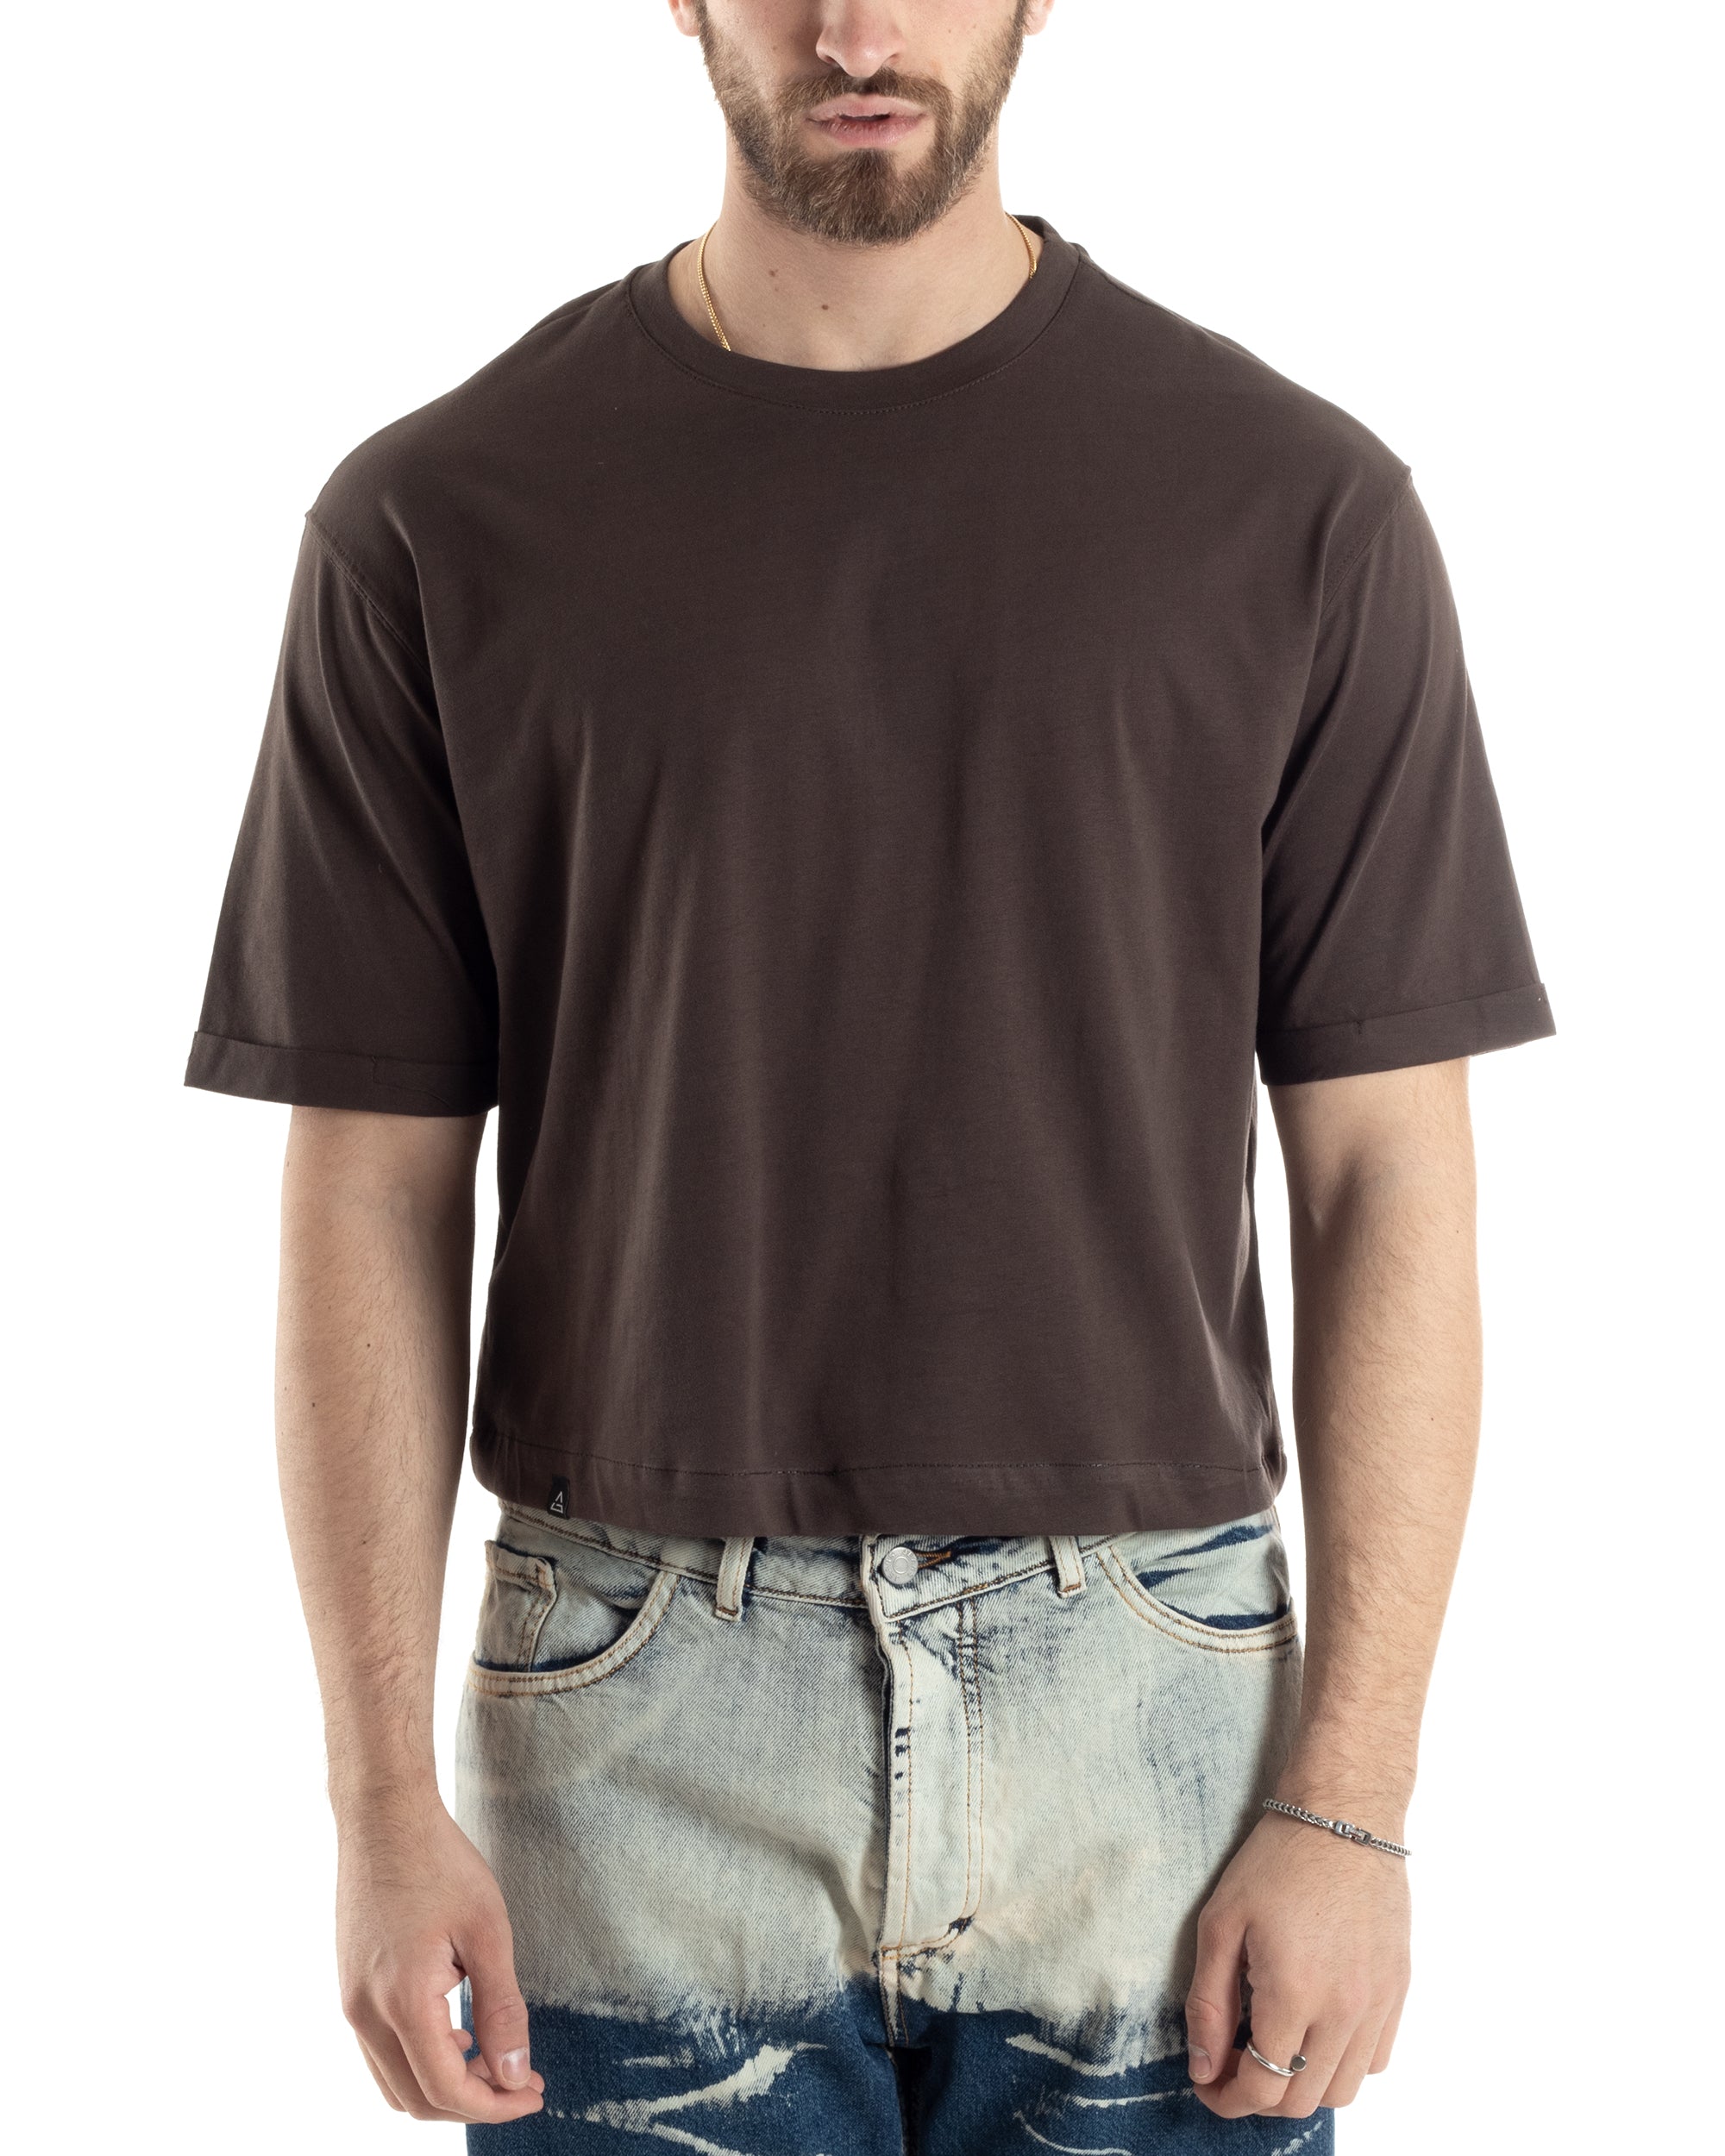 T-shirt Uomo Cropped Corta Boxy Fit Tinta Unita Marrone Casual GIOSAL-TS3008A